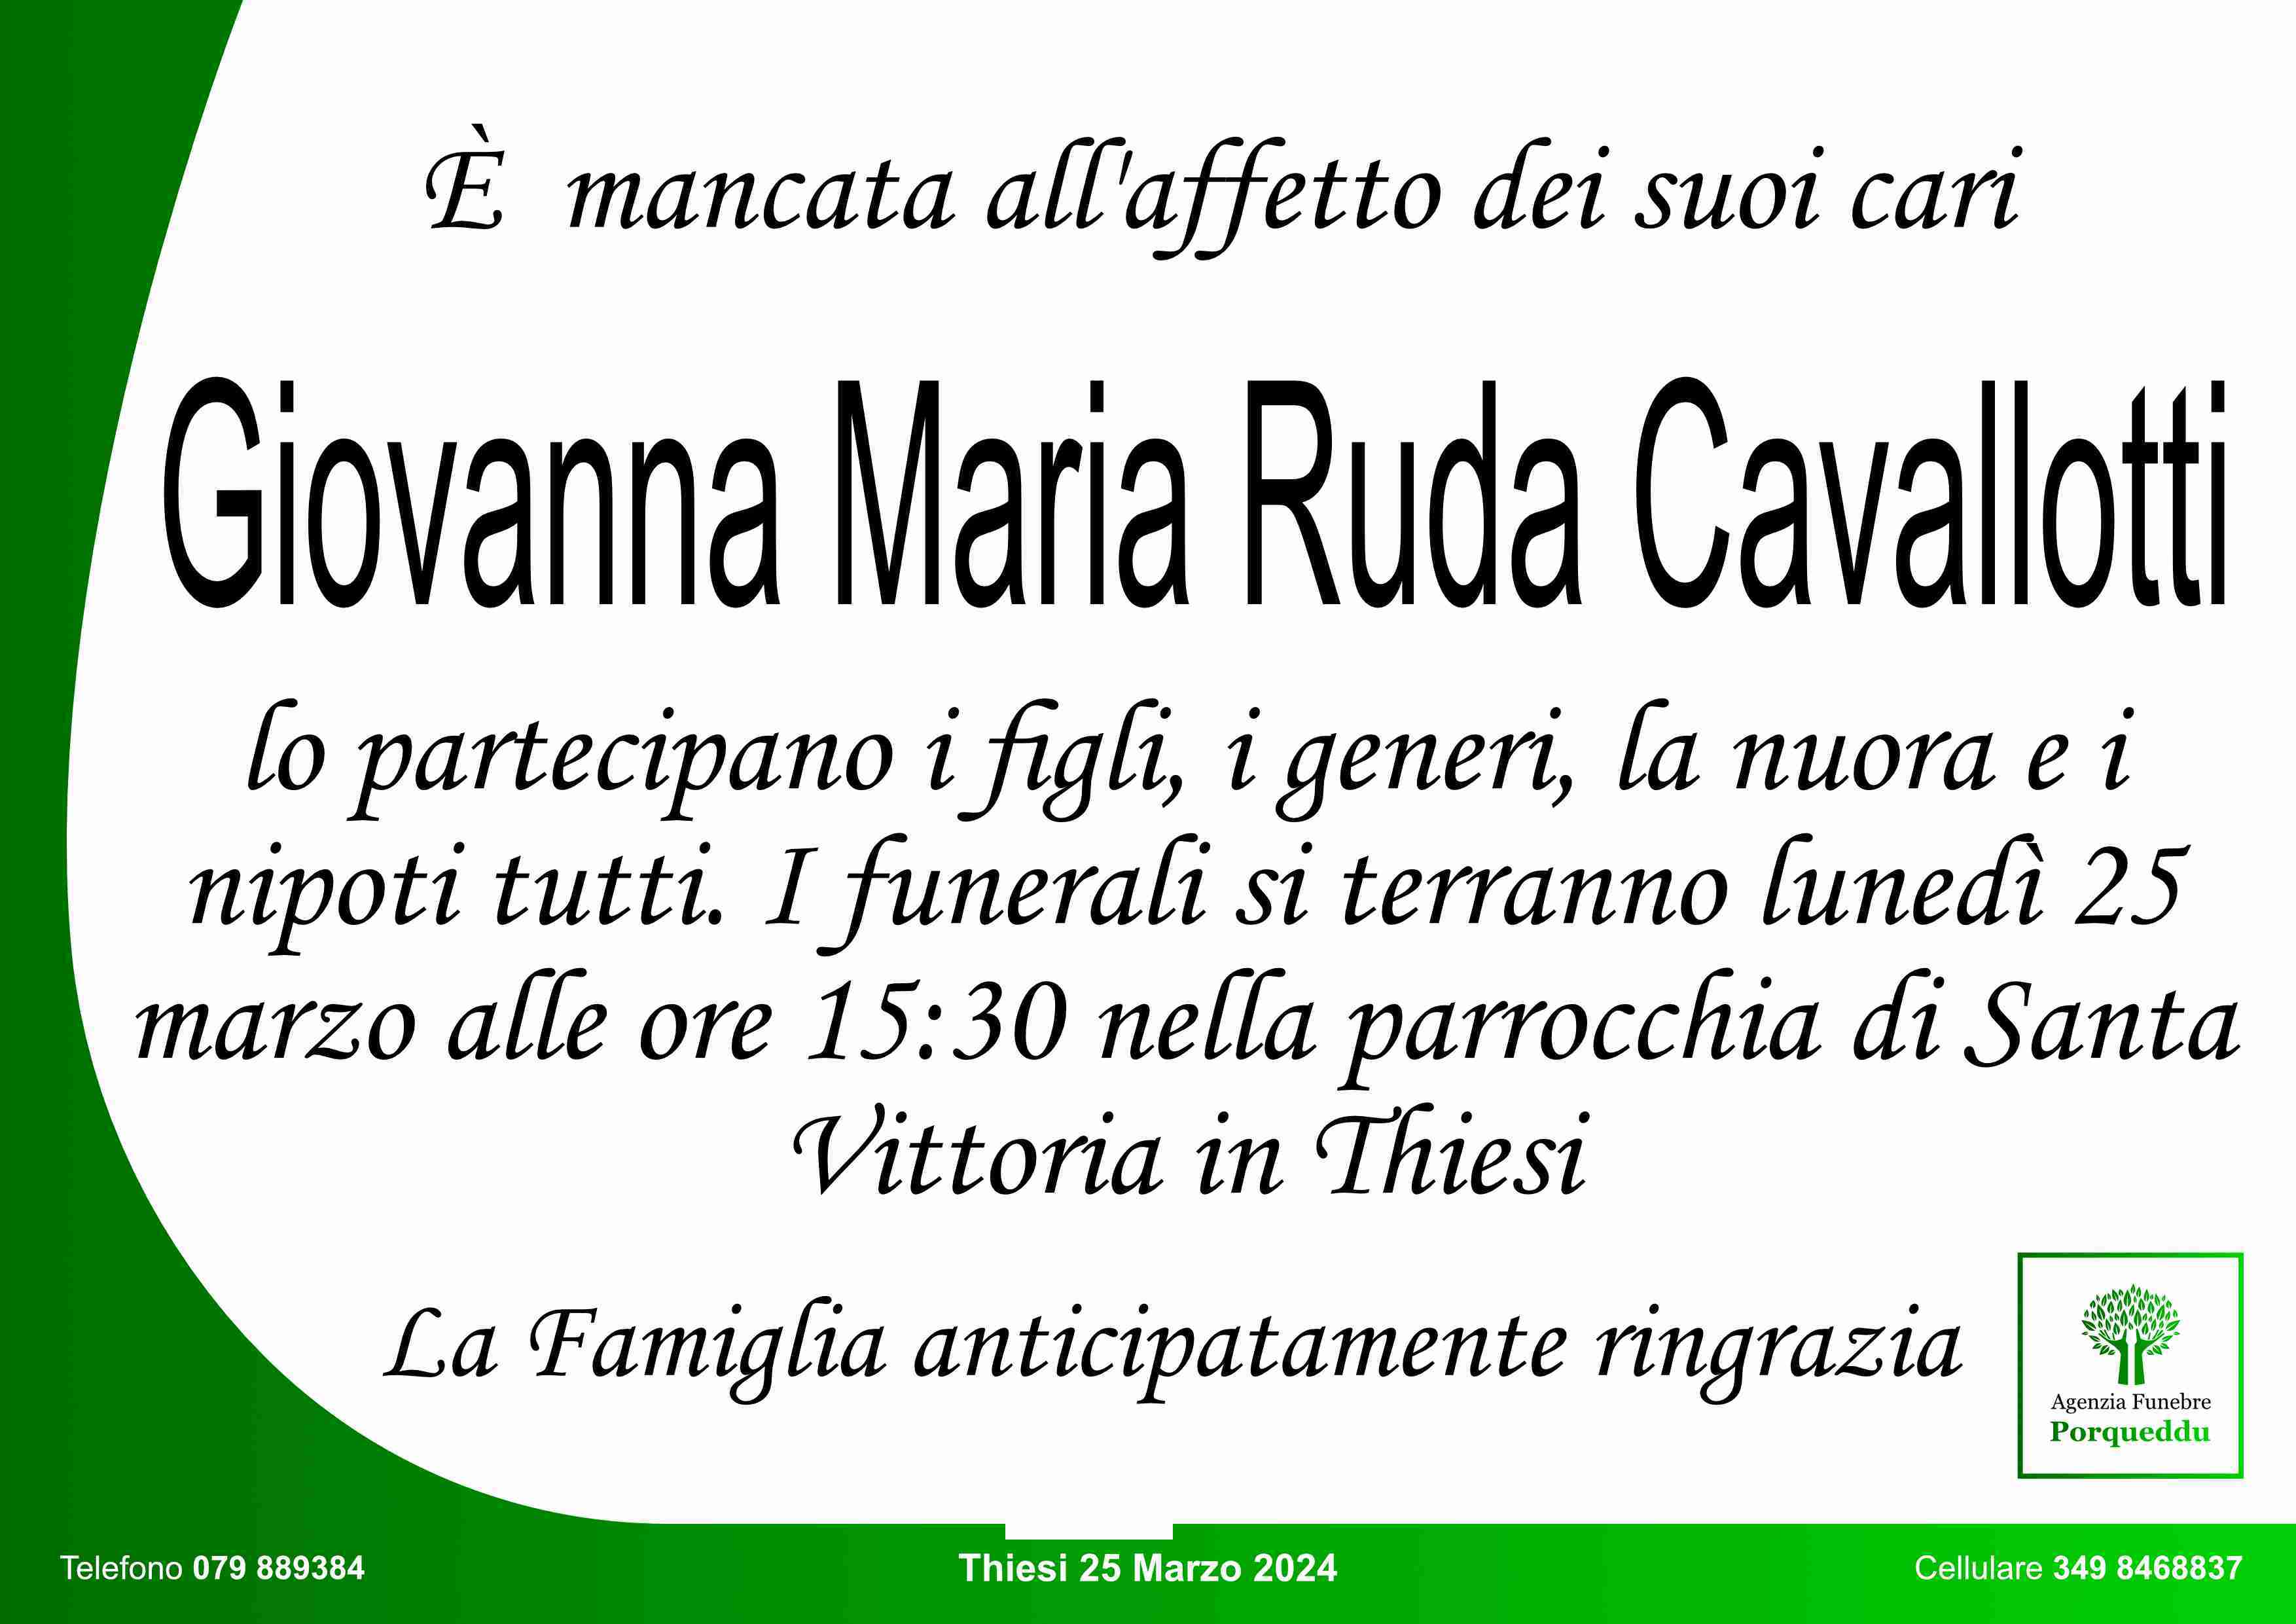 Giovanna Maria Ruda Cavallotti